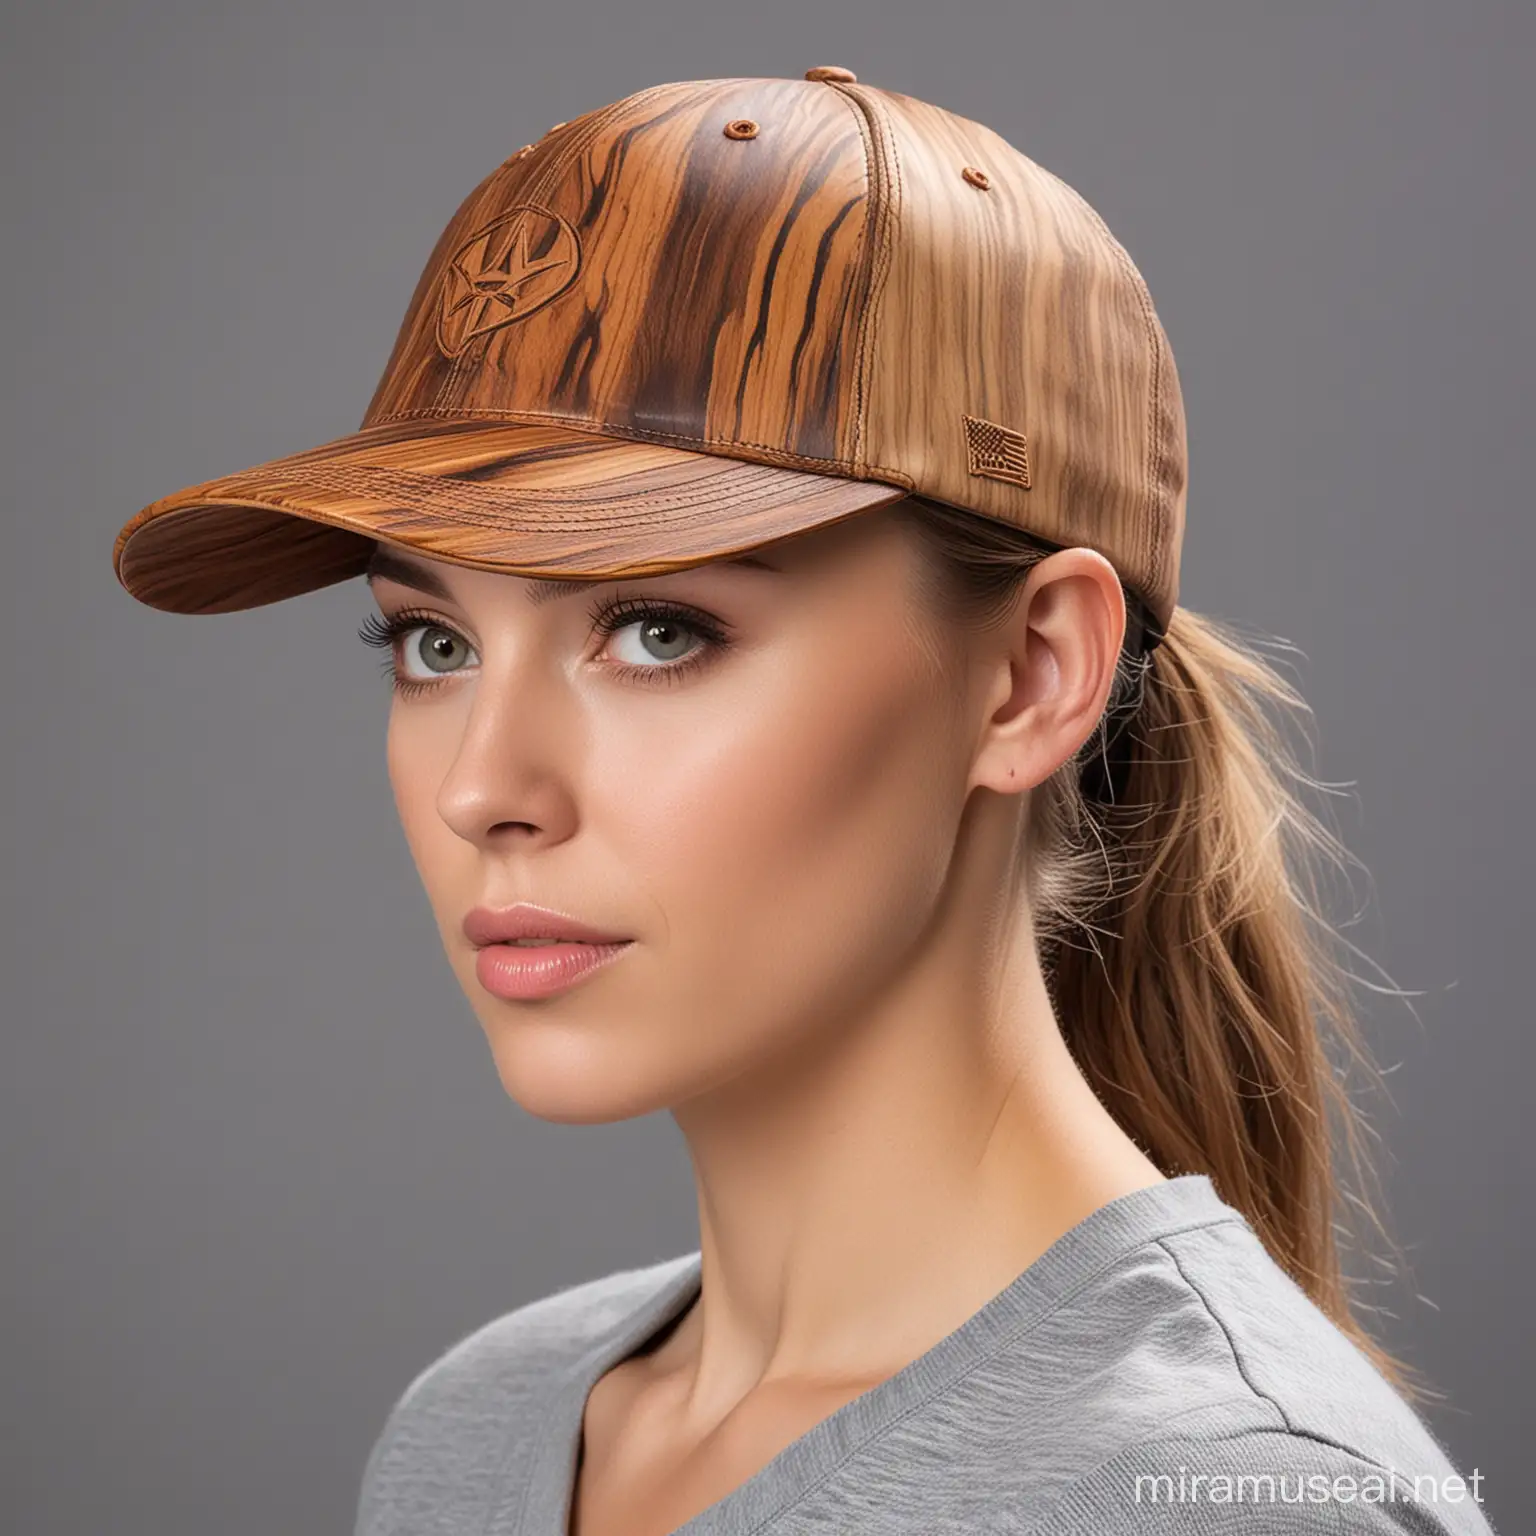 Stylish WoodThemed Cap for Global Trendsetters